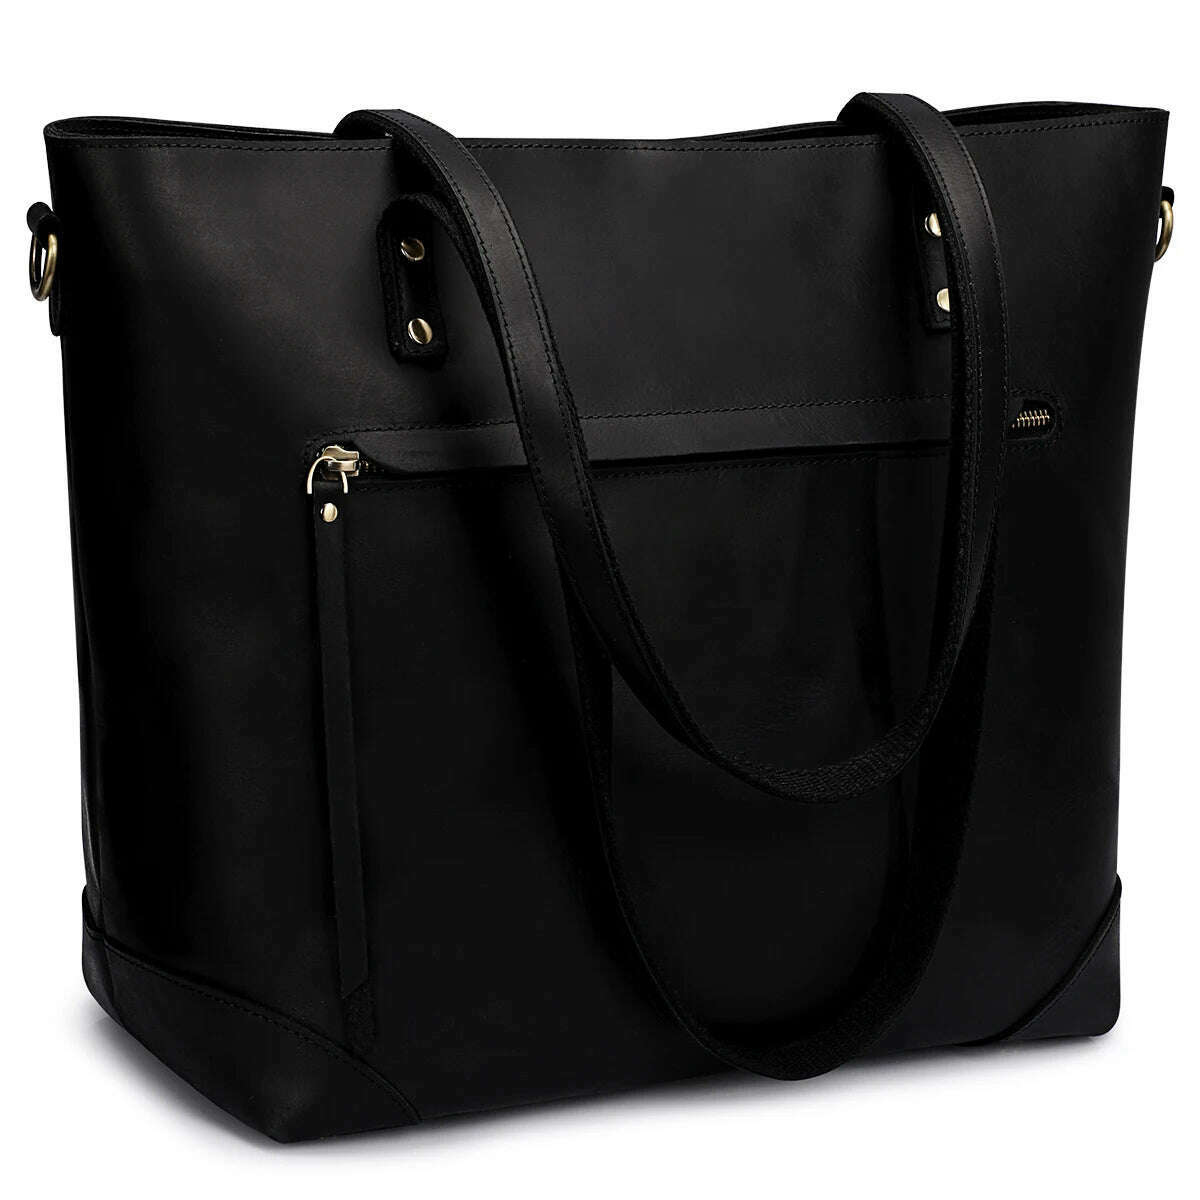 KIMLUD, S-ZONE Vintage Genuine Leather Shoulder Bag Work Totes for Women Purse Handbag with Back Zipper Pocket Large, Black / China, KIMLUD Womens Clothes